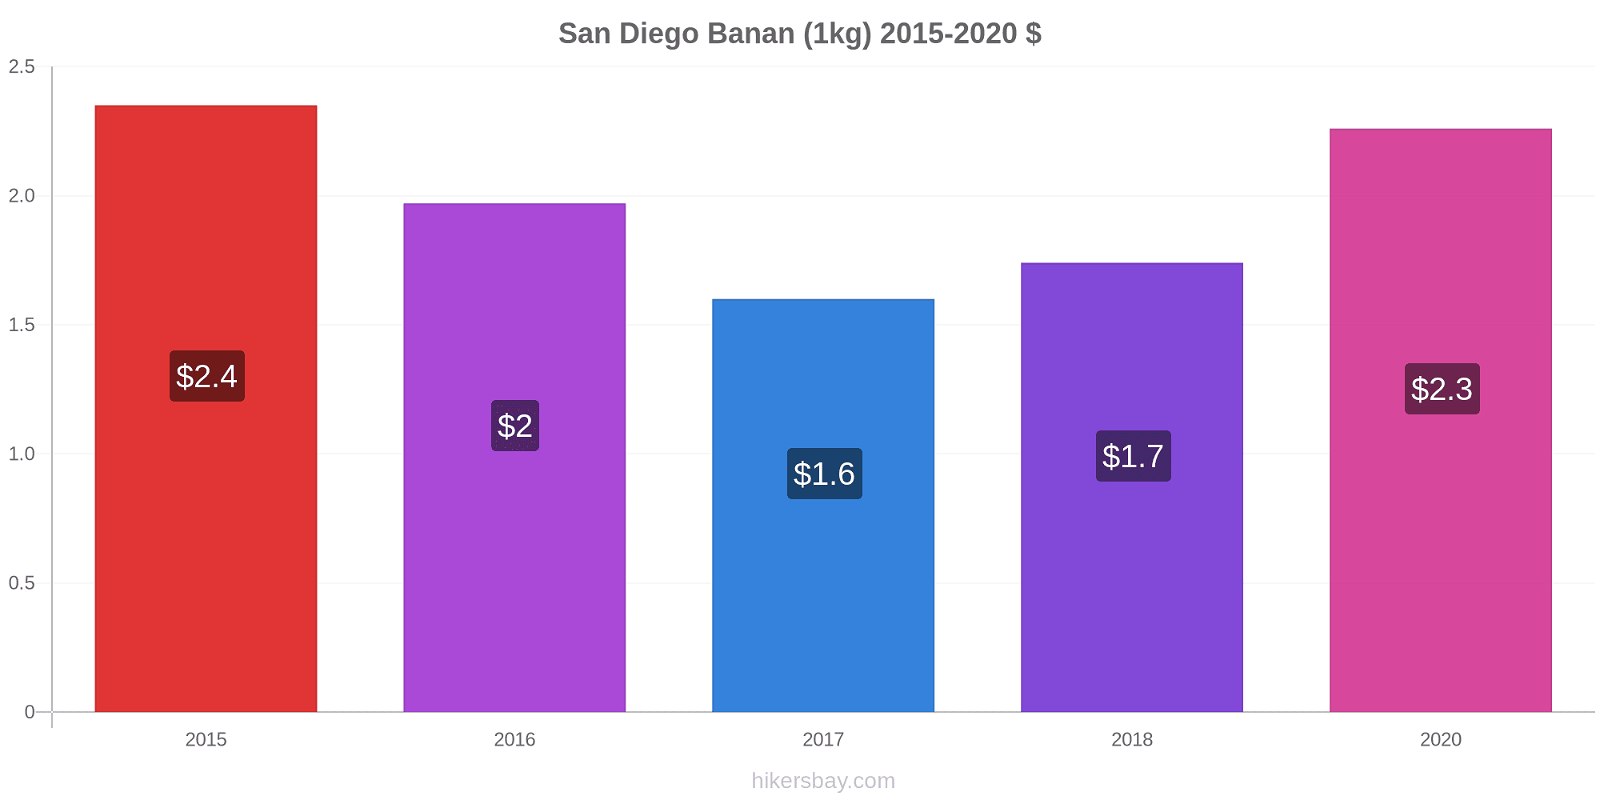 San Diego prisendringer Banan (1kg) hikersbay.com